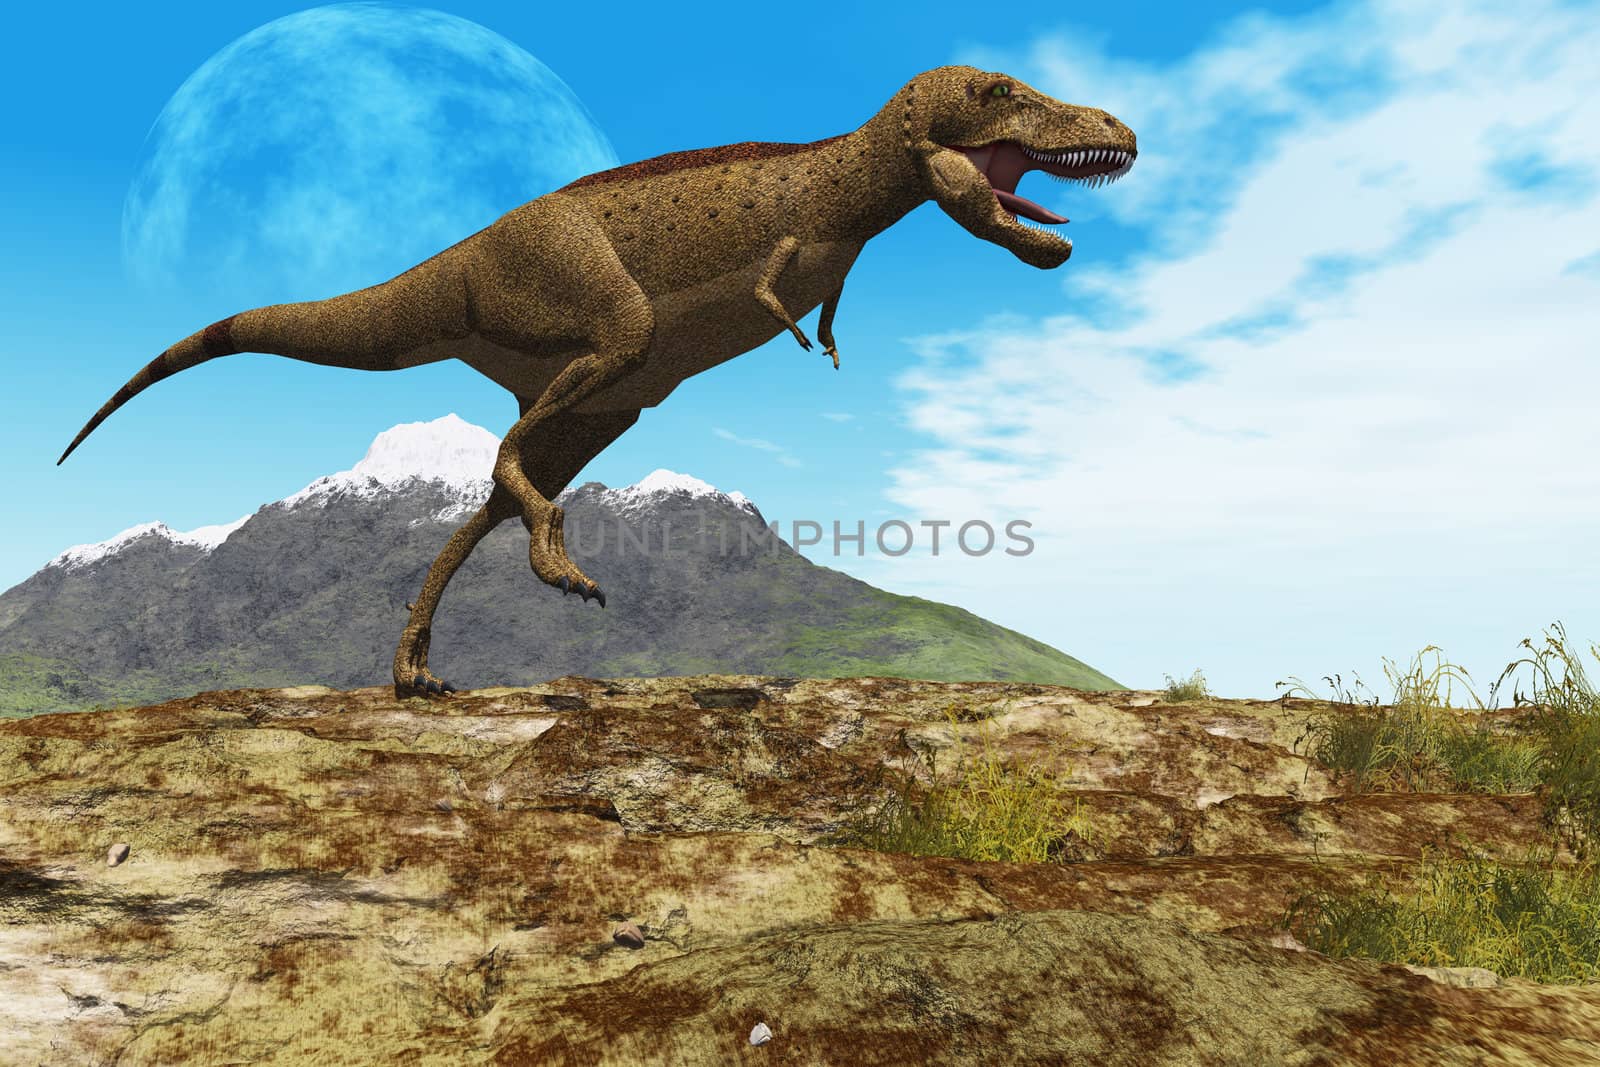 A Tyrannosaurus Rex dinosaur walks through his territory.